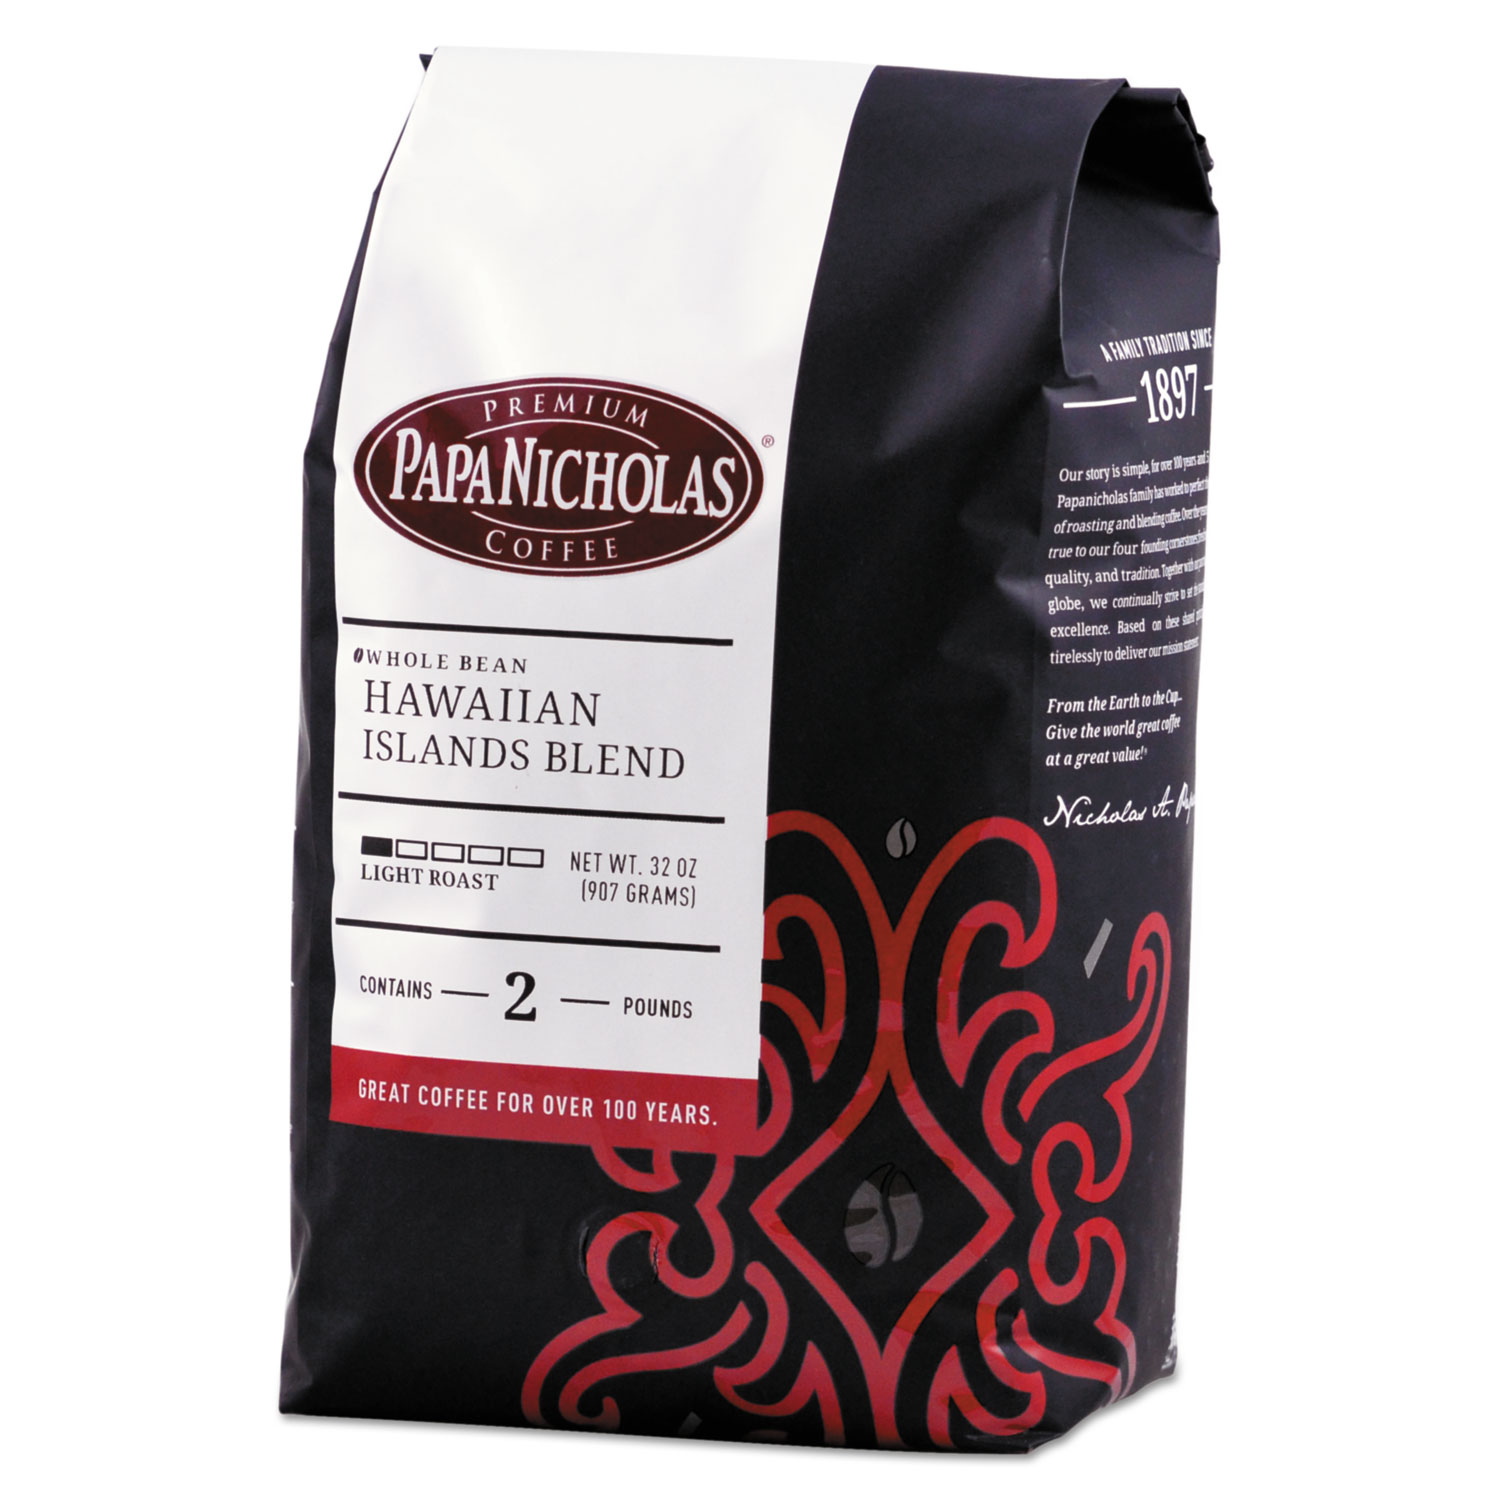  PapaNicholas Coffee 32003 Premium Coffee, Whole Bean, Hawaiian Islands Blend (PCO32003) 